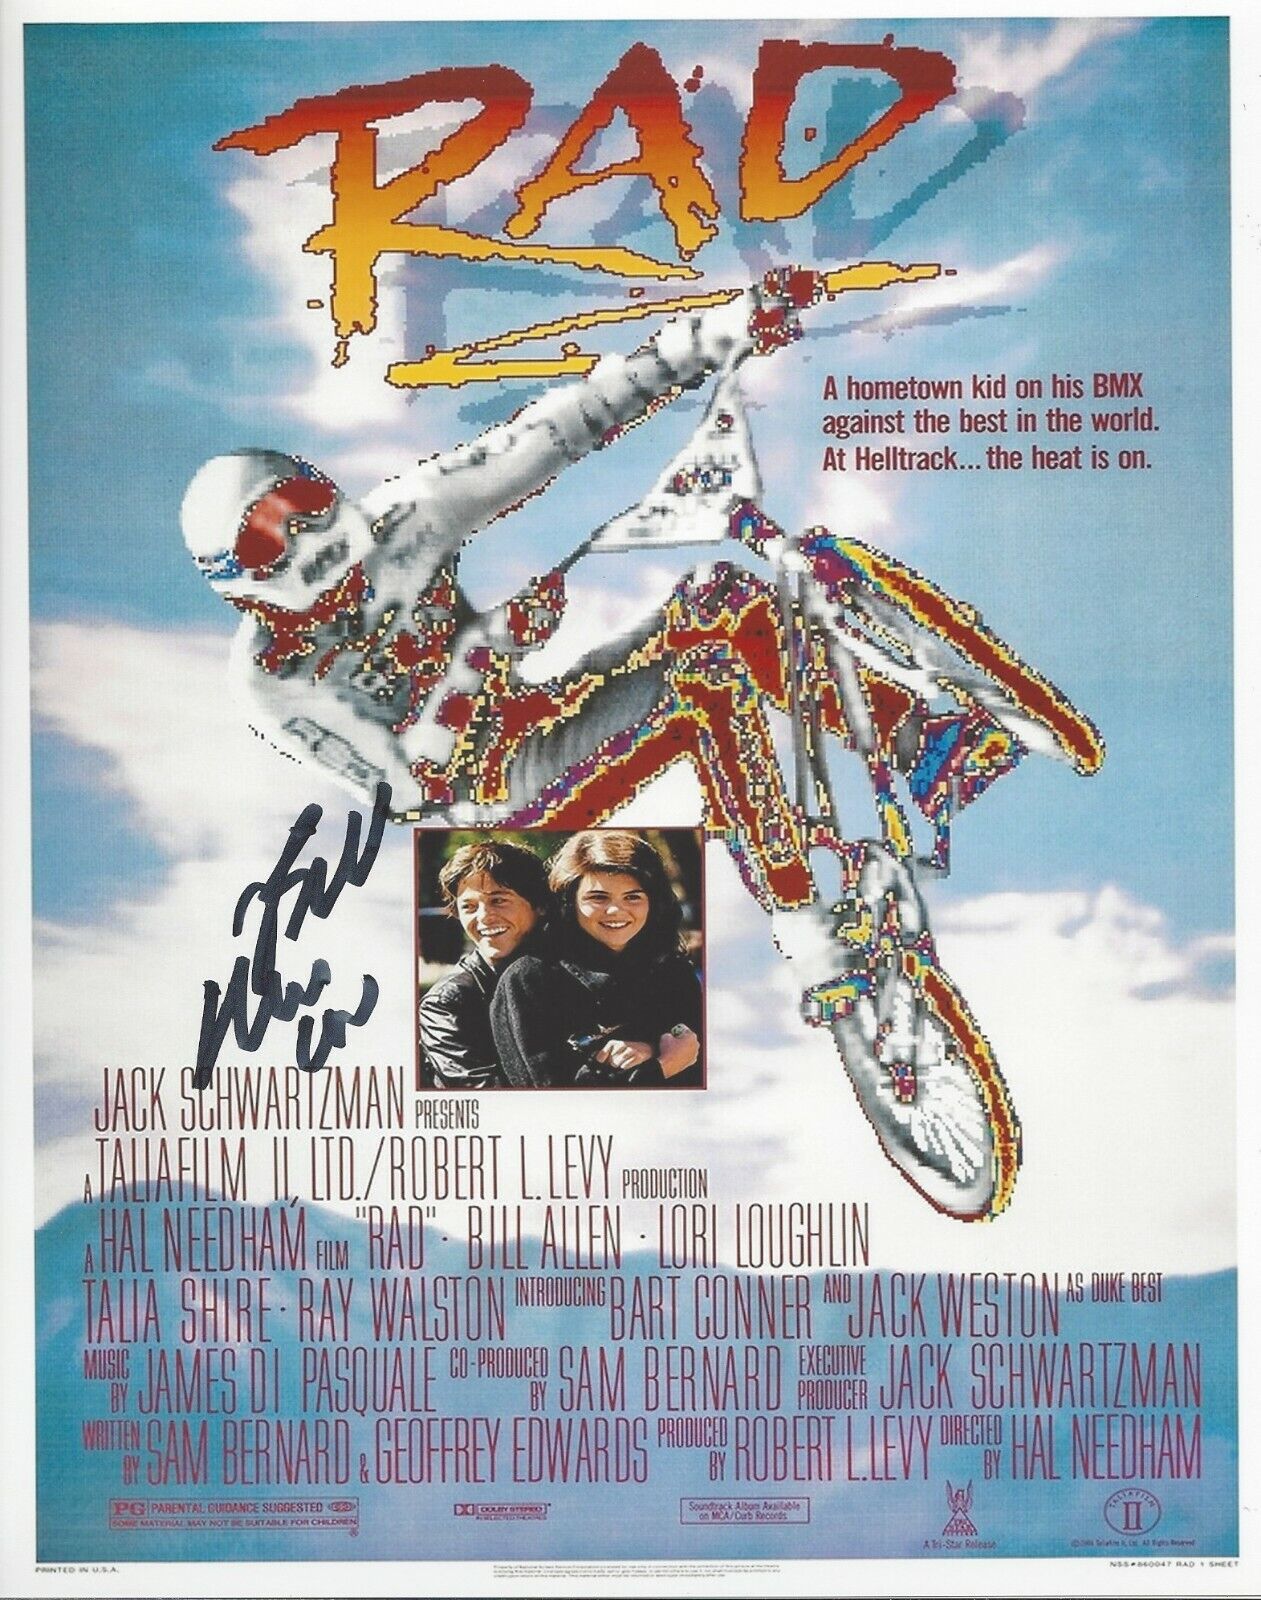 BILL ALLEN SIGNED 'RAD' MOVIE POSTER 8x10 Photo Poster painting COA CRU JONES #33 1986 PROOF